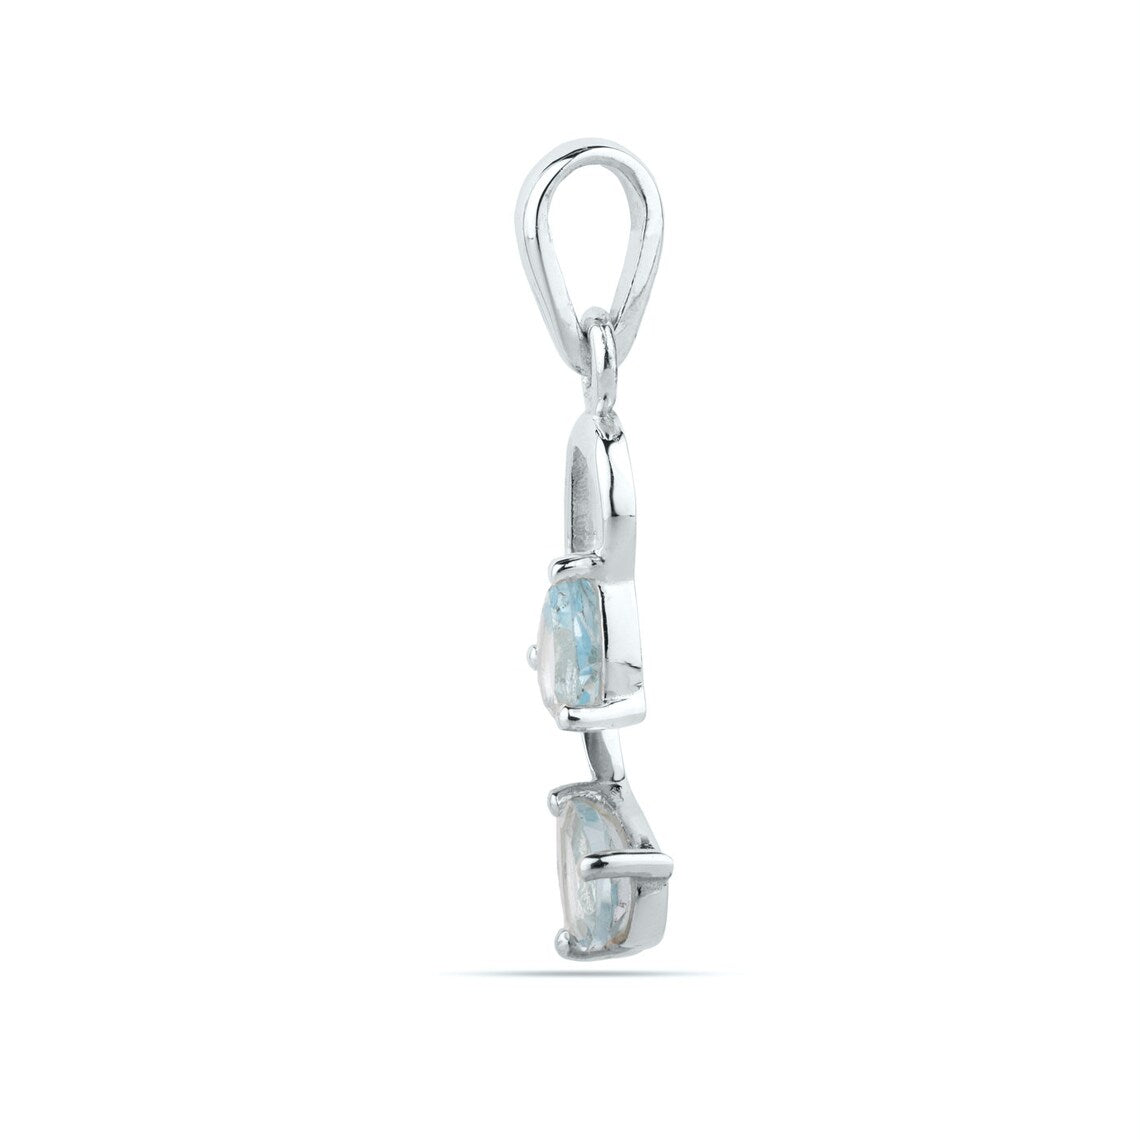 Blue topaz pendant, 5×7mm pear shaped Blue topaz necklace solitaire pendant, December birthstone, bridal pendant